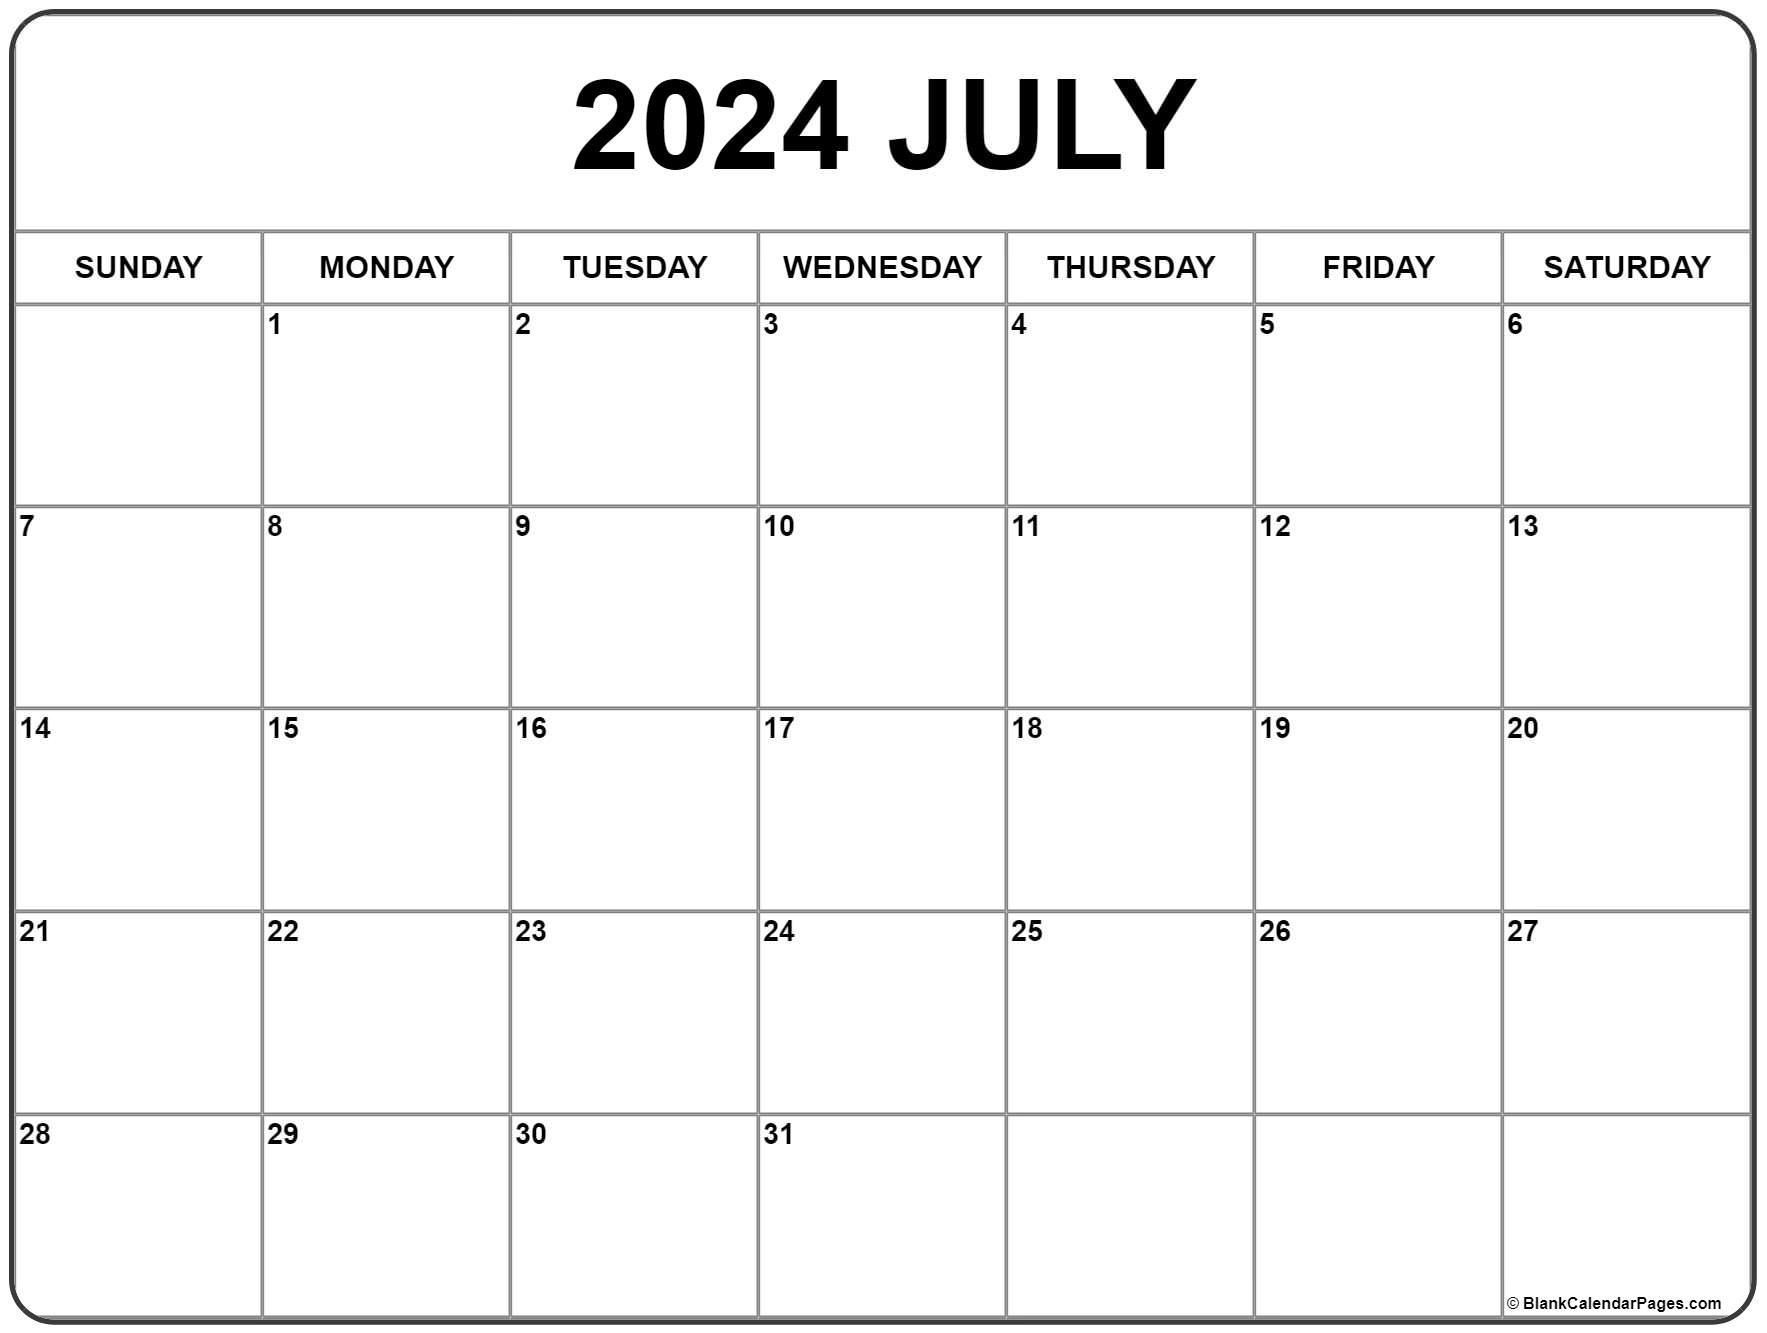 July 2024 Calendar | Free Printable Calendar regarding 10 Month Calendar Starting July 2024